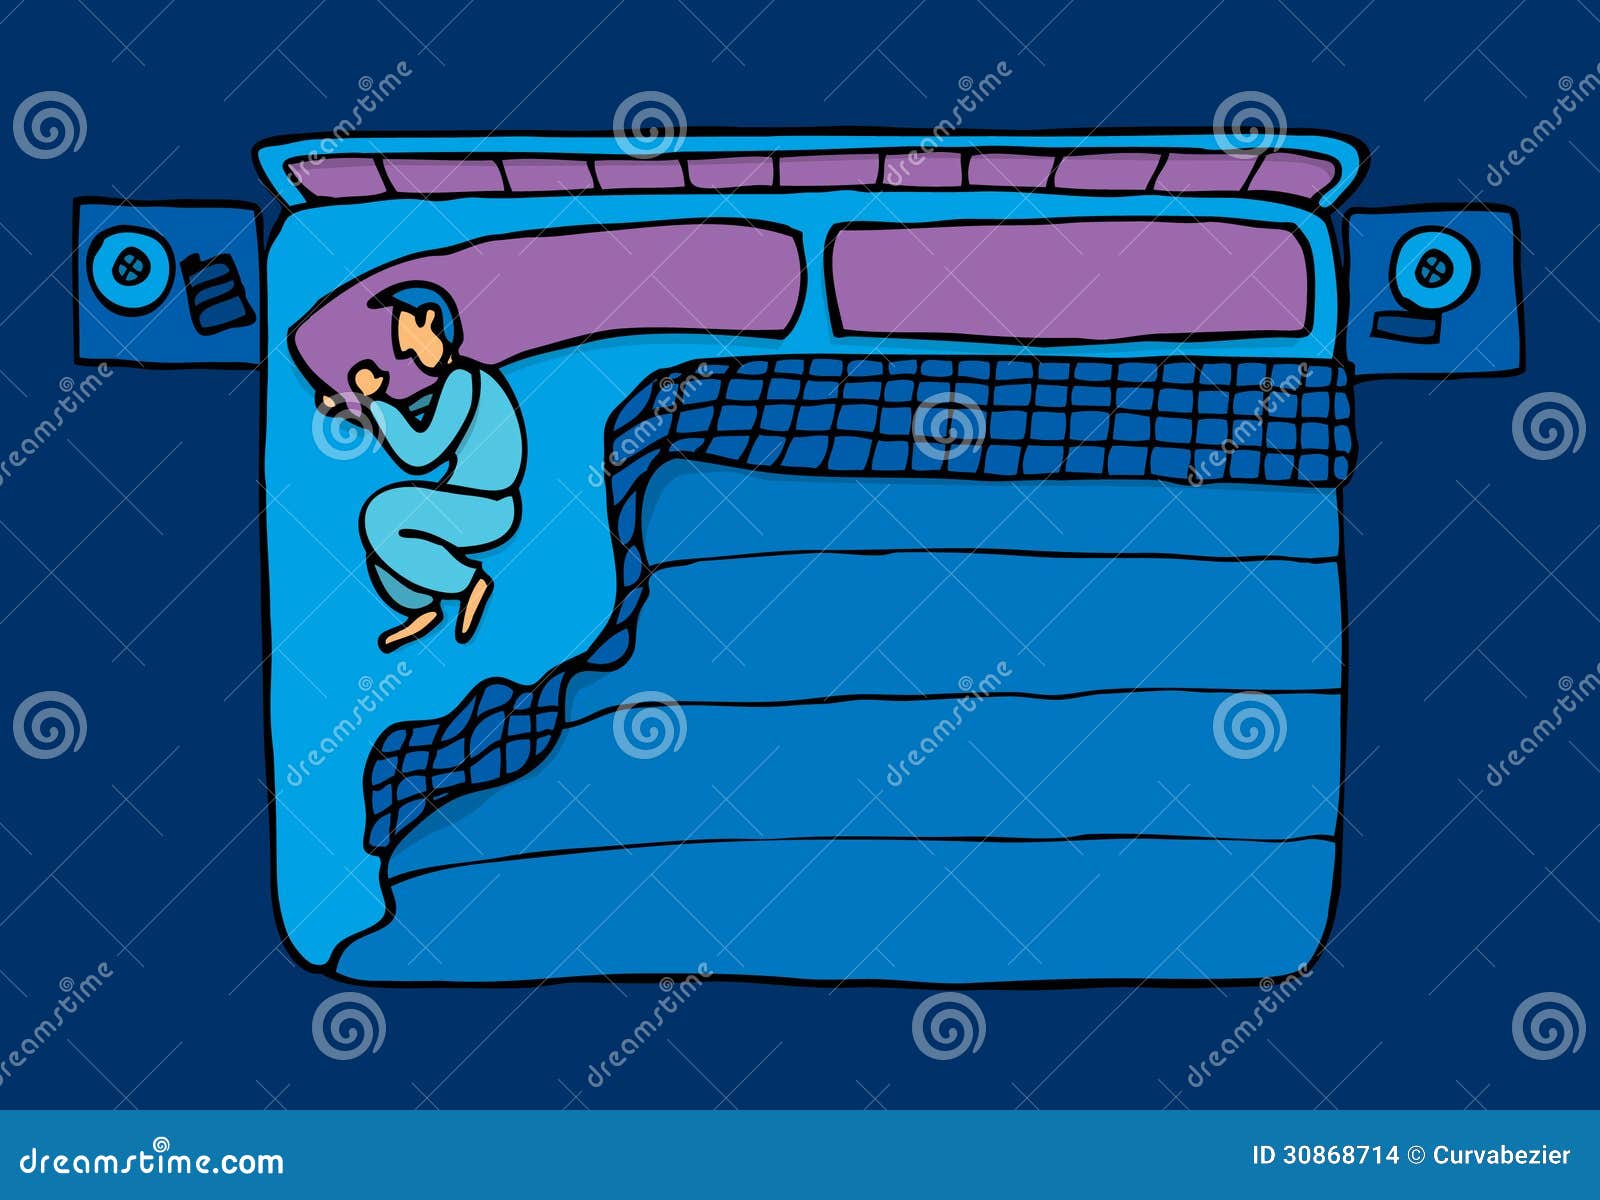 Lonely Blue Guy Sleeping Stock Images - Image: 30868714